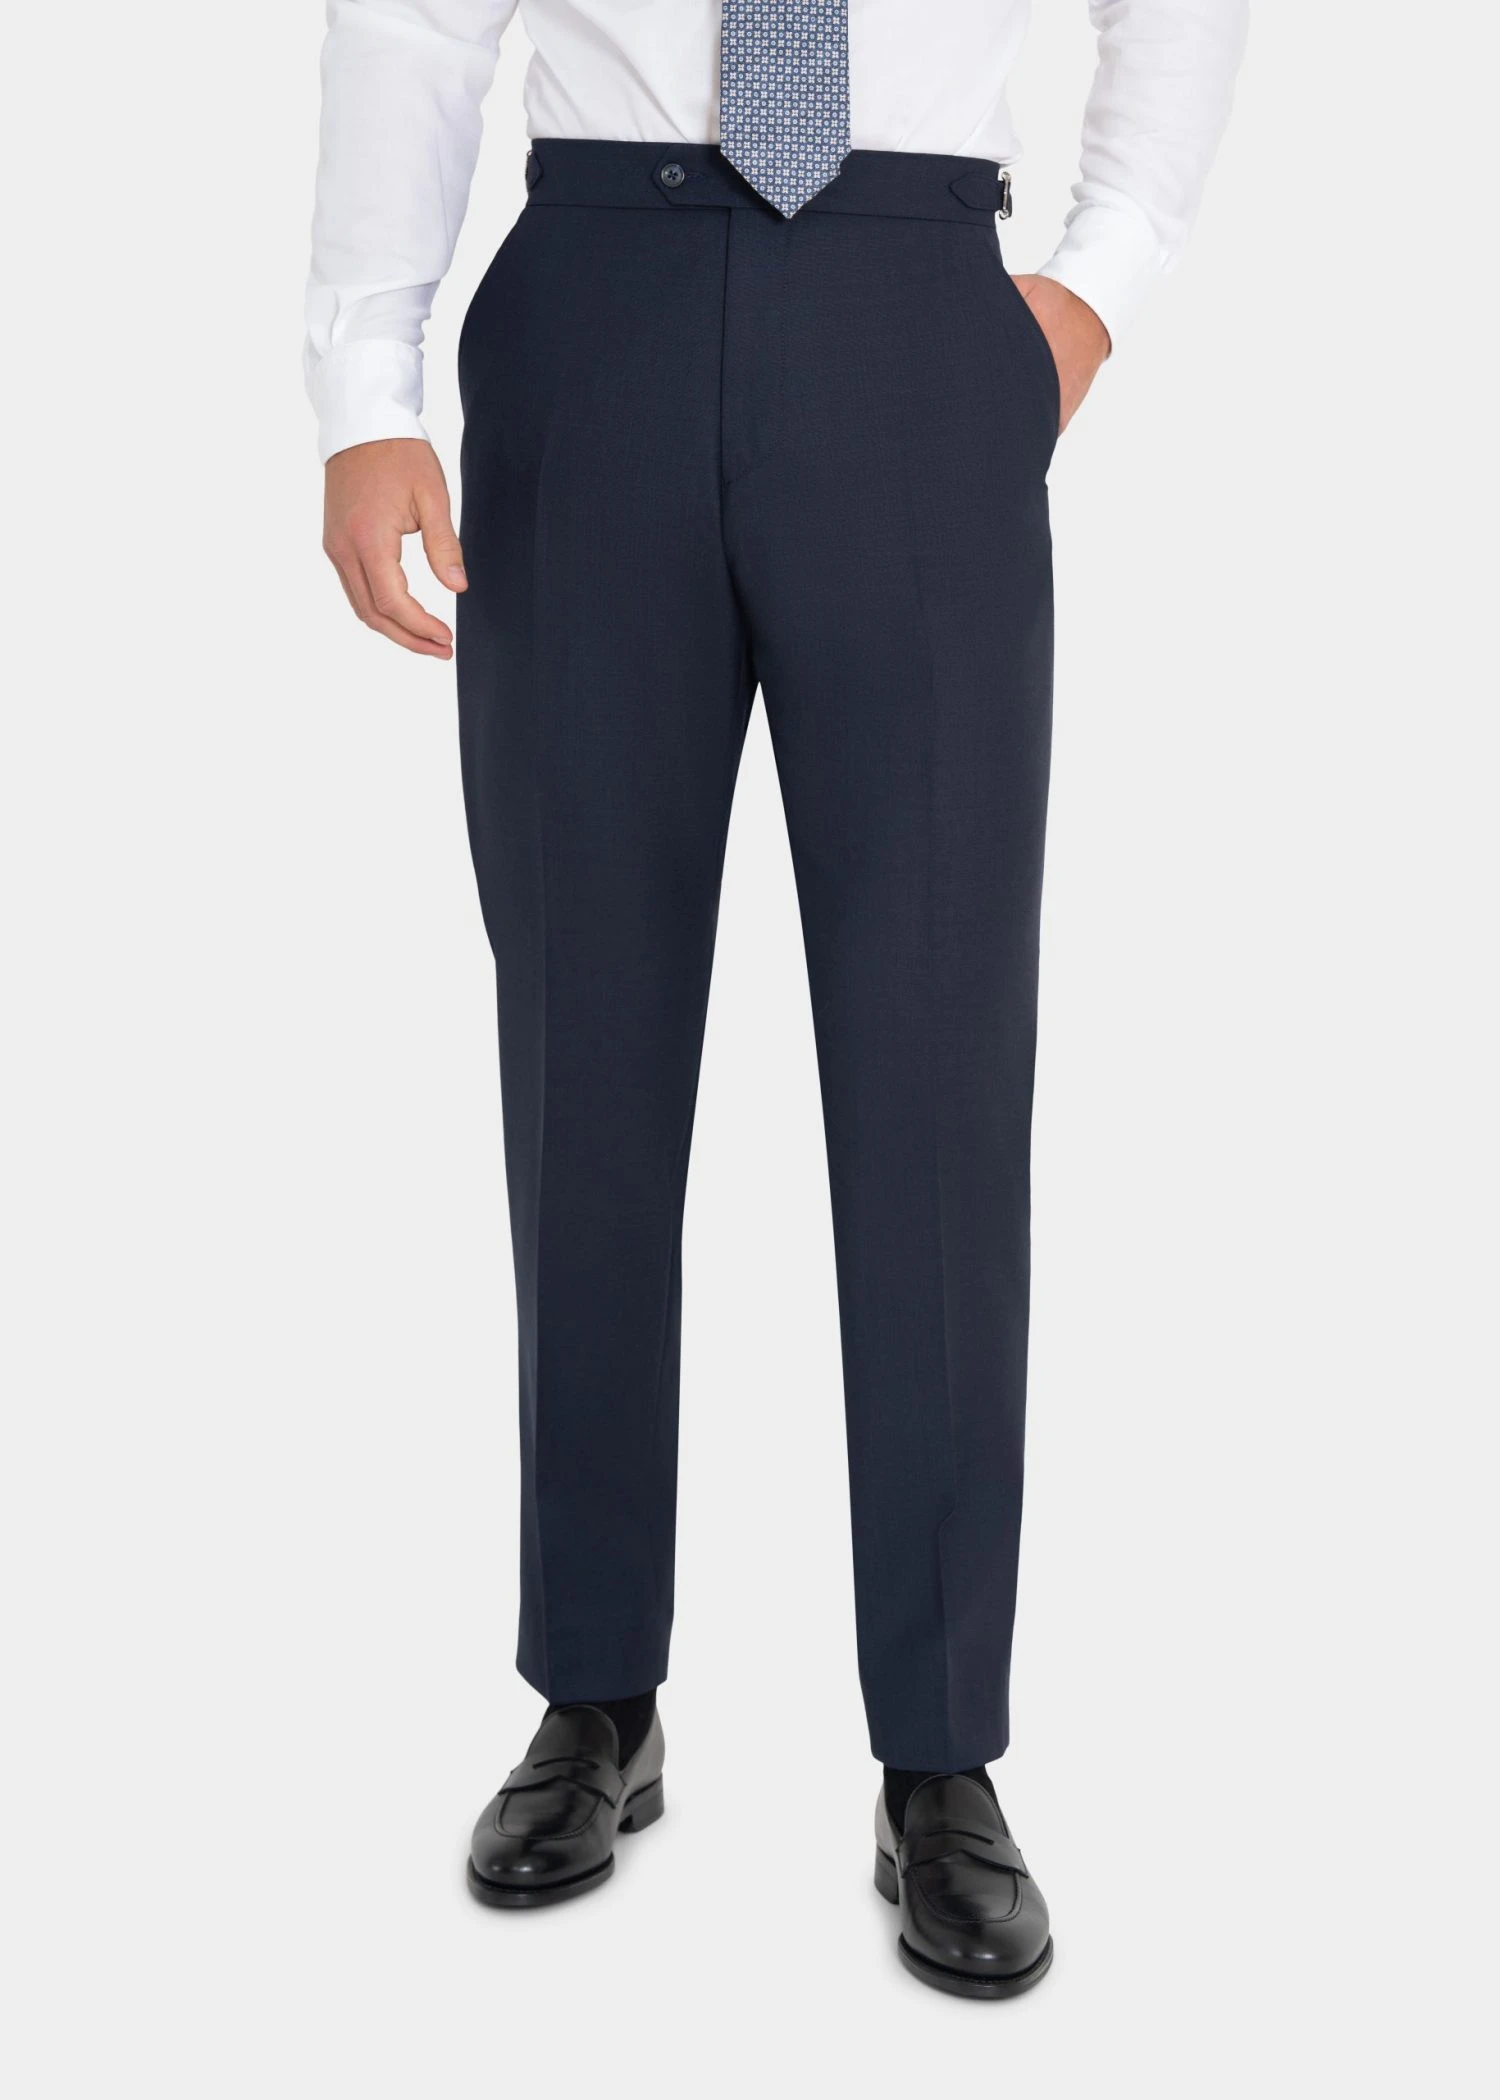 navy melange blue suit trousers in twistair fabric